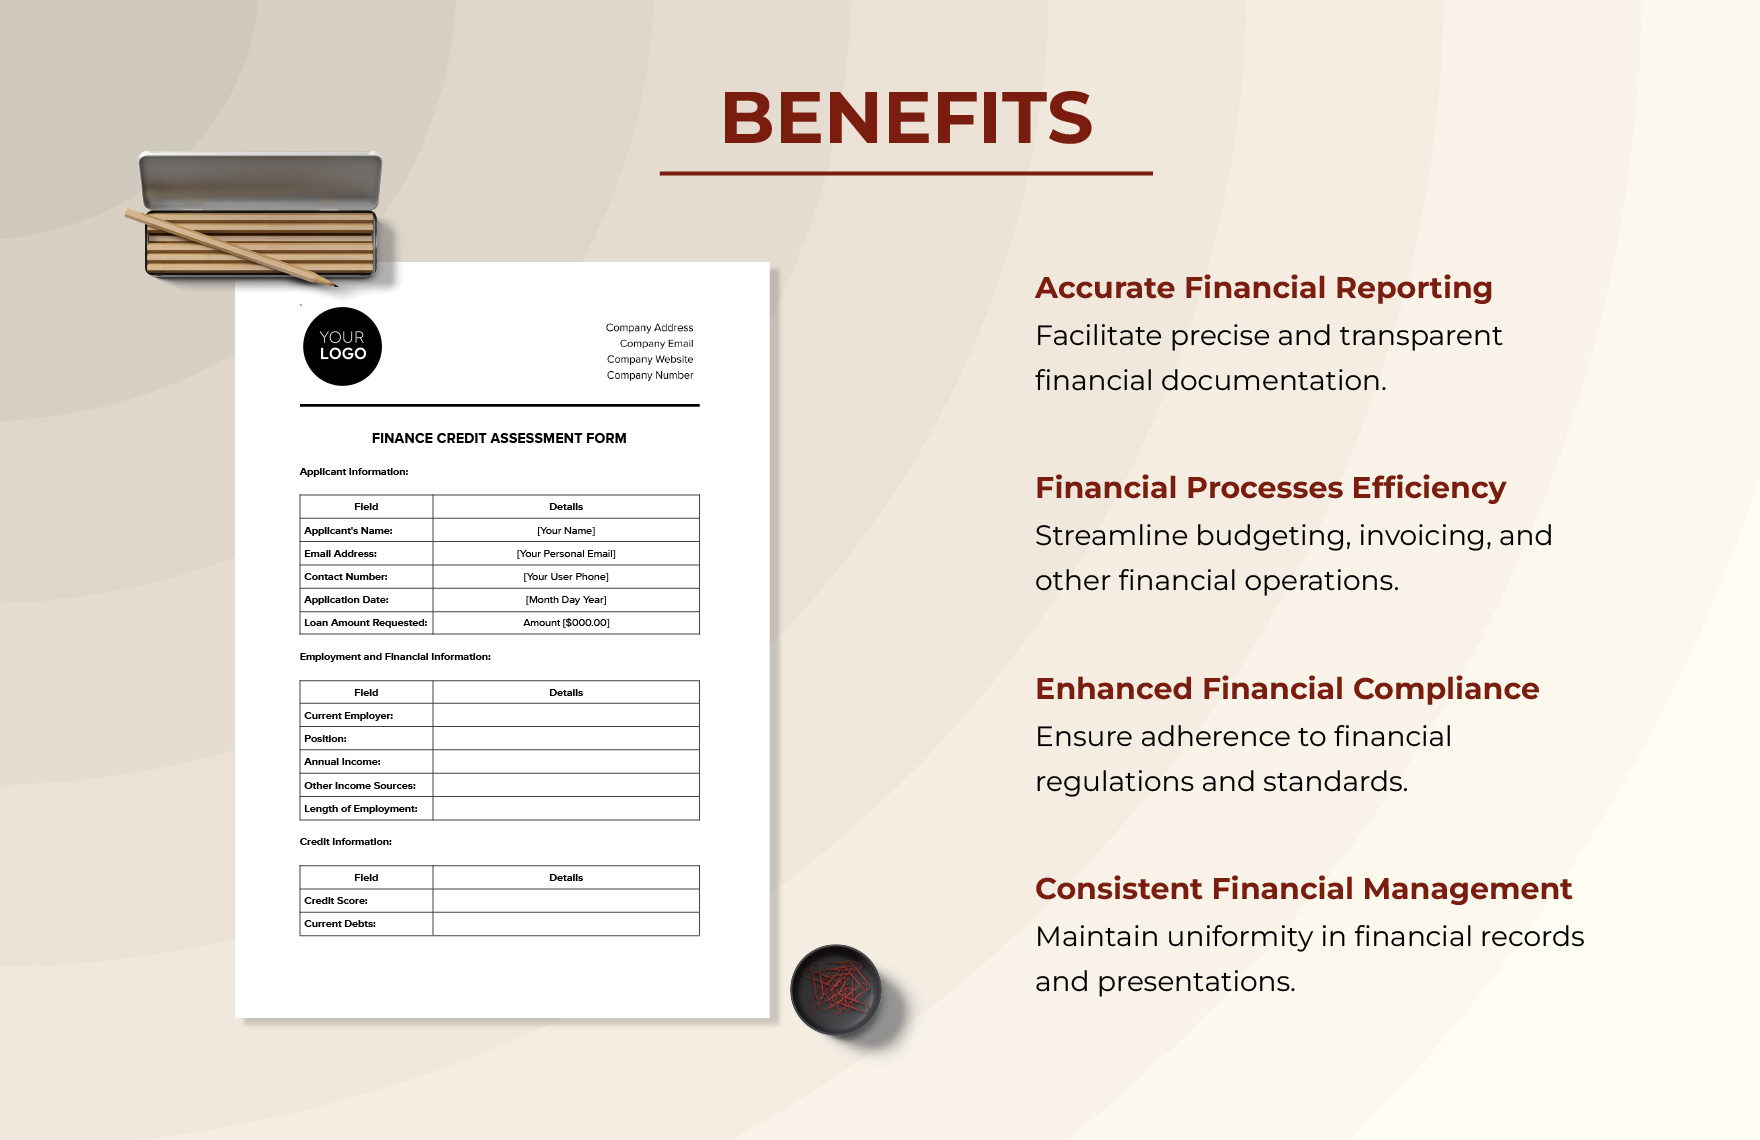 Finance Credit Assessment Form Template